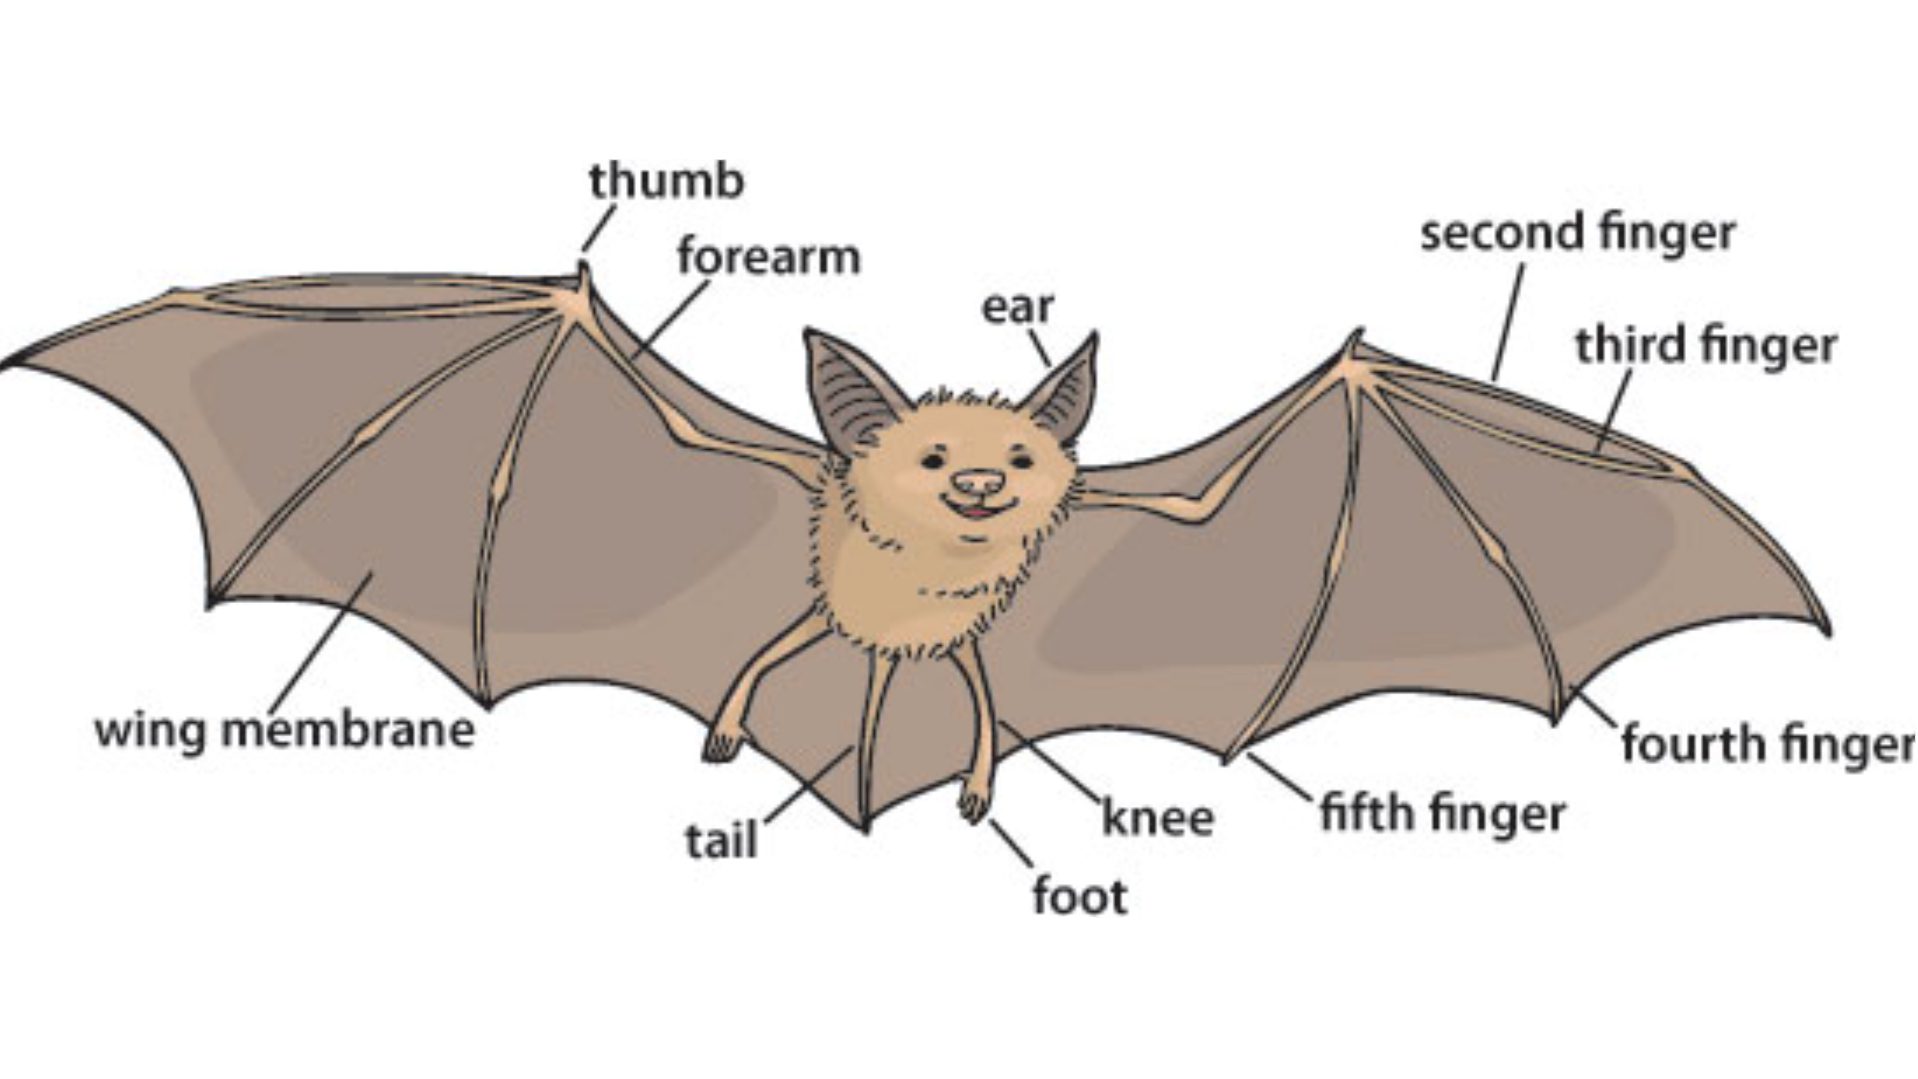 The anatomy of a bat.